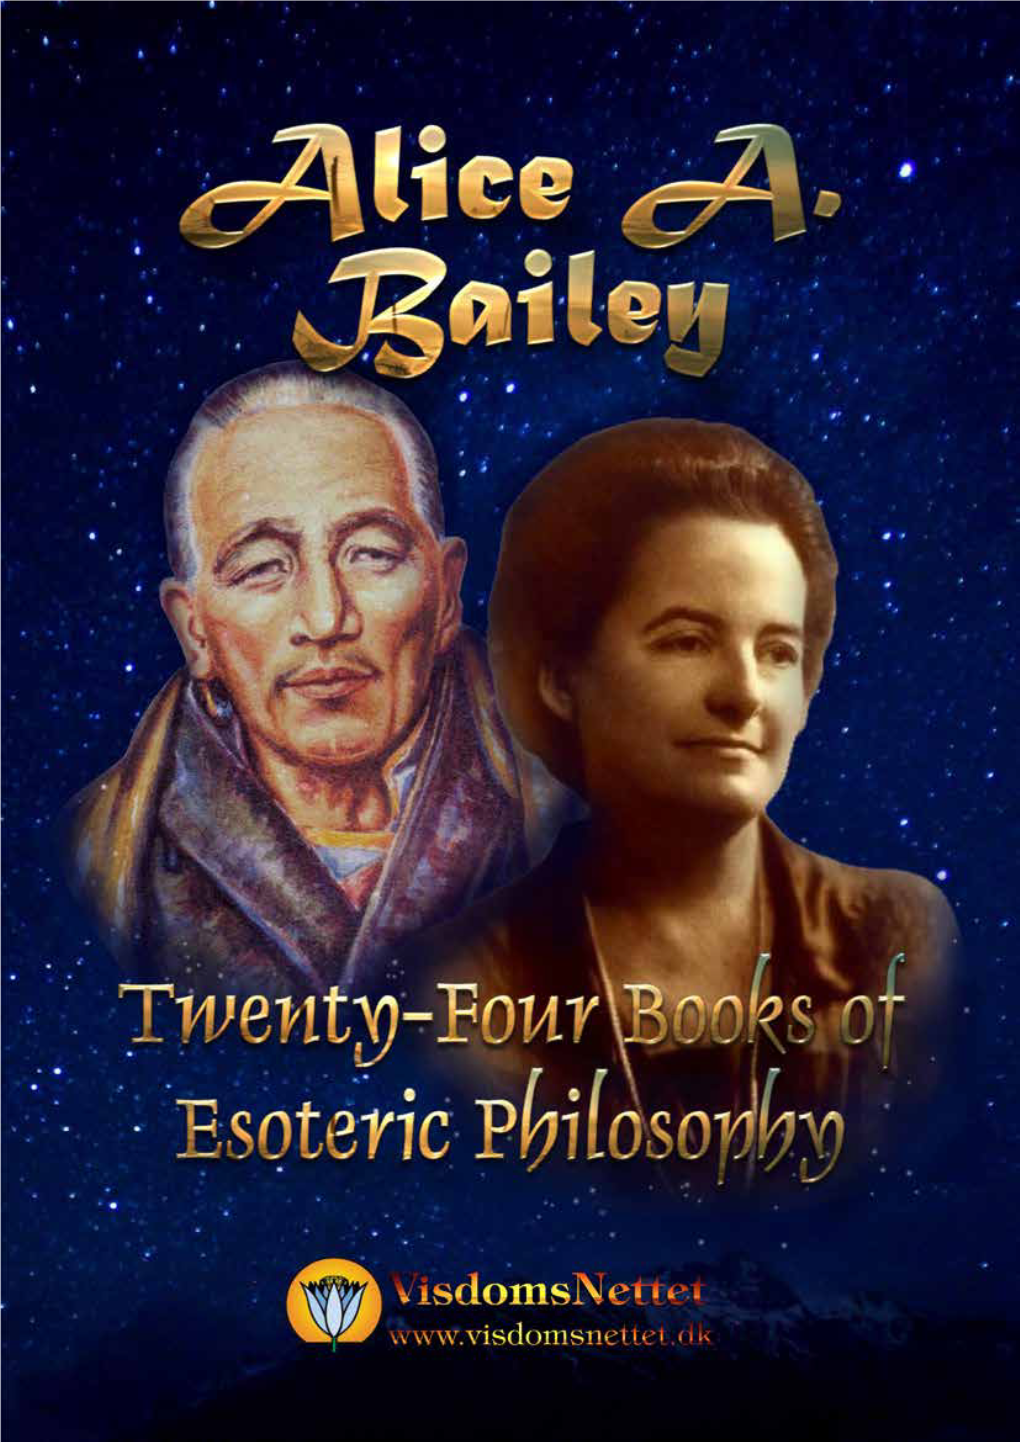 Twenty-Four Books of Esoteric Philosophy